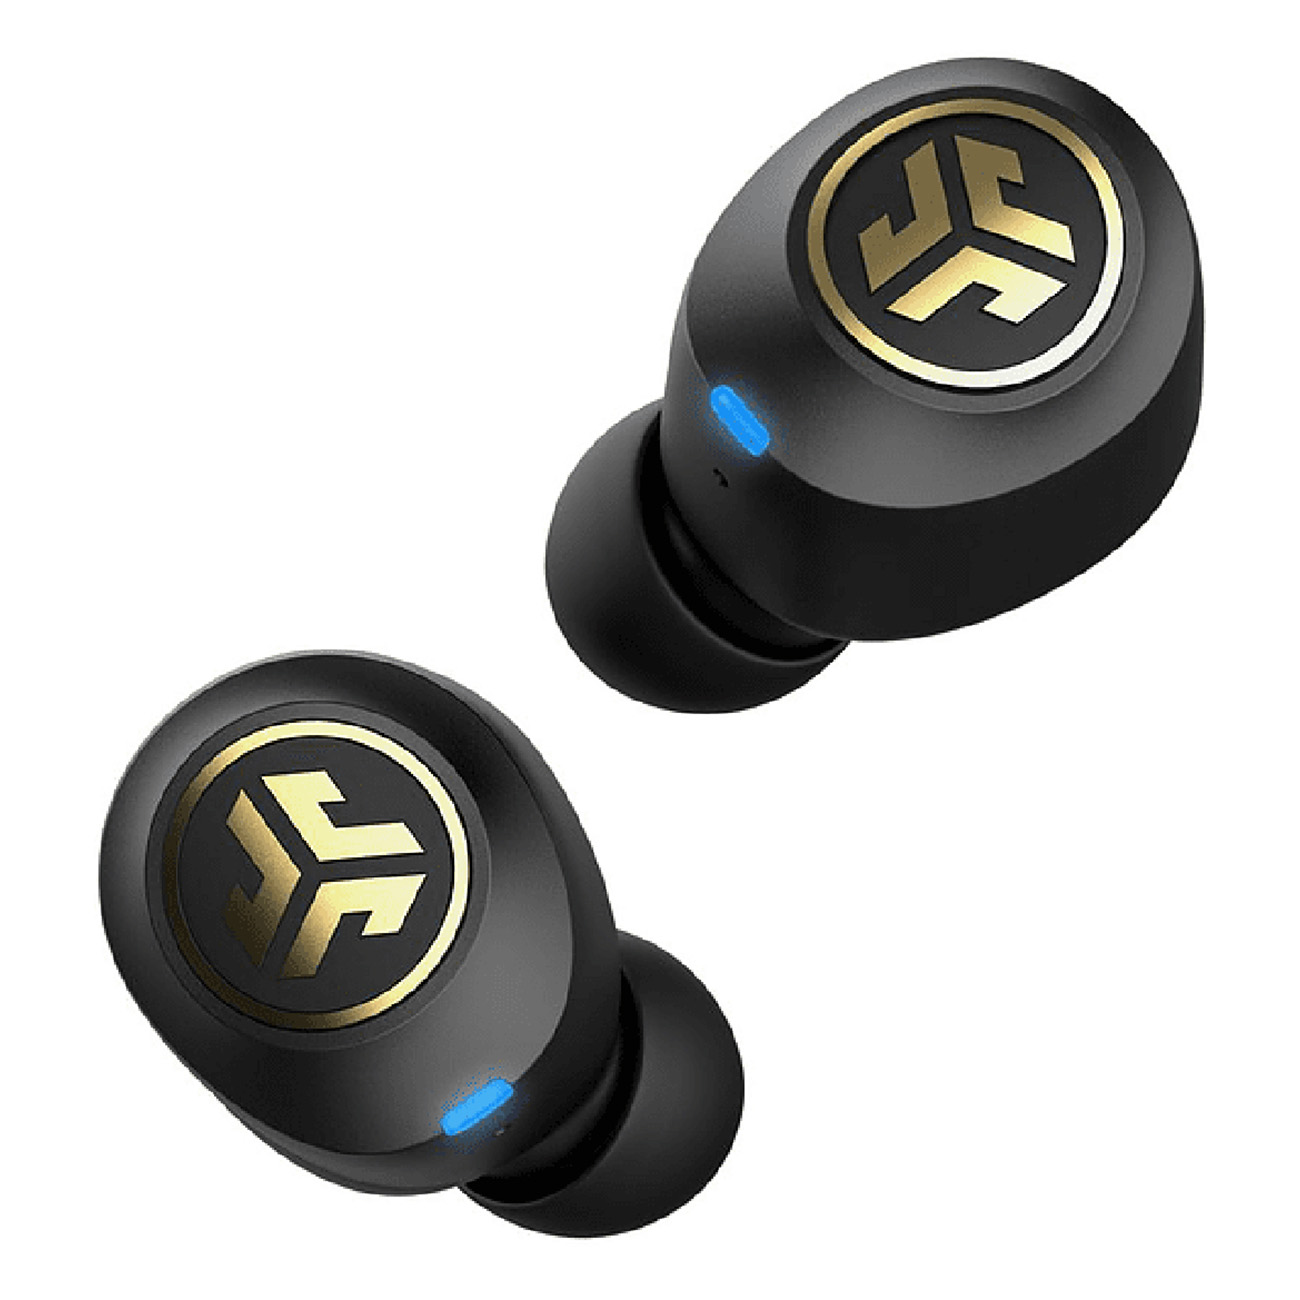 JBuds schwarz Air JLAB Bluetooth Kopfhörer In-ear Icon,